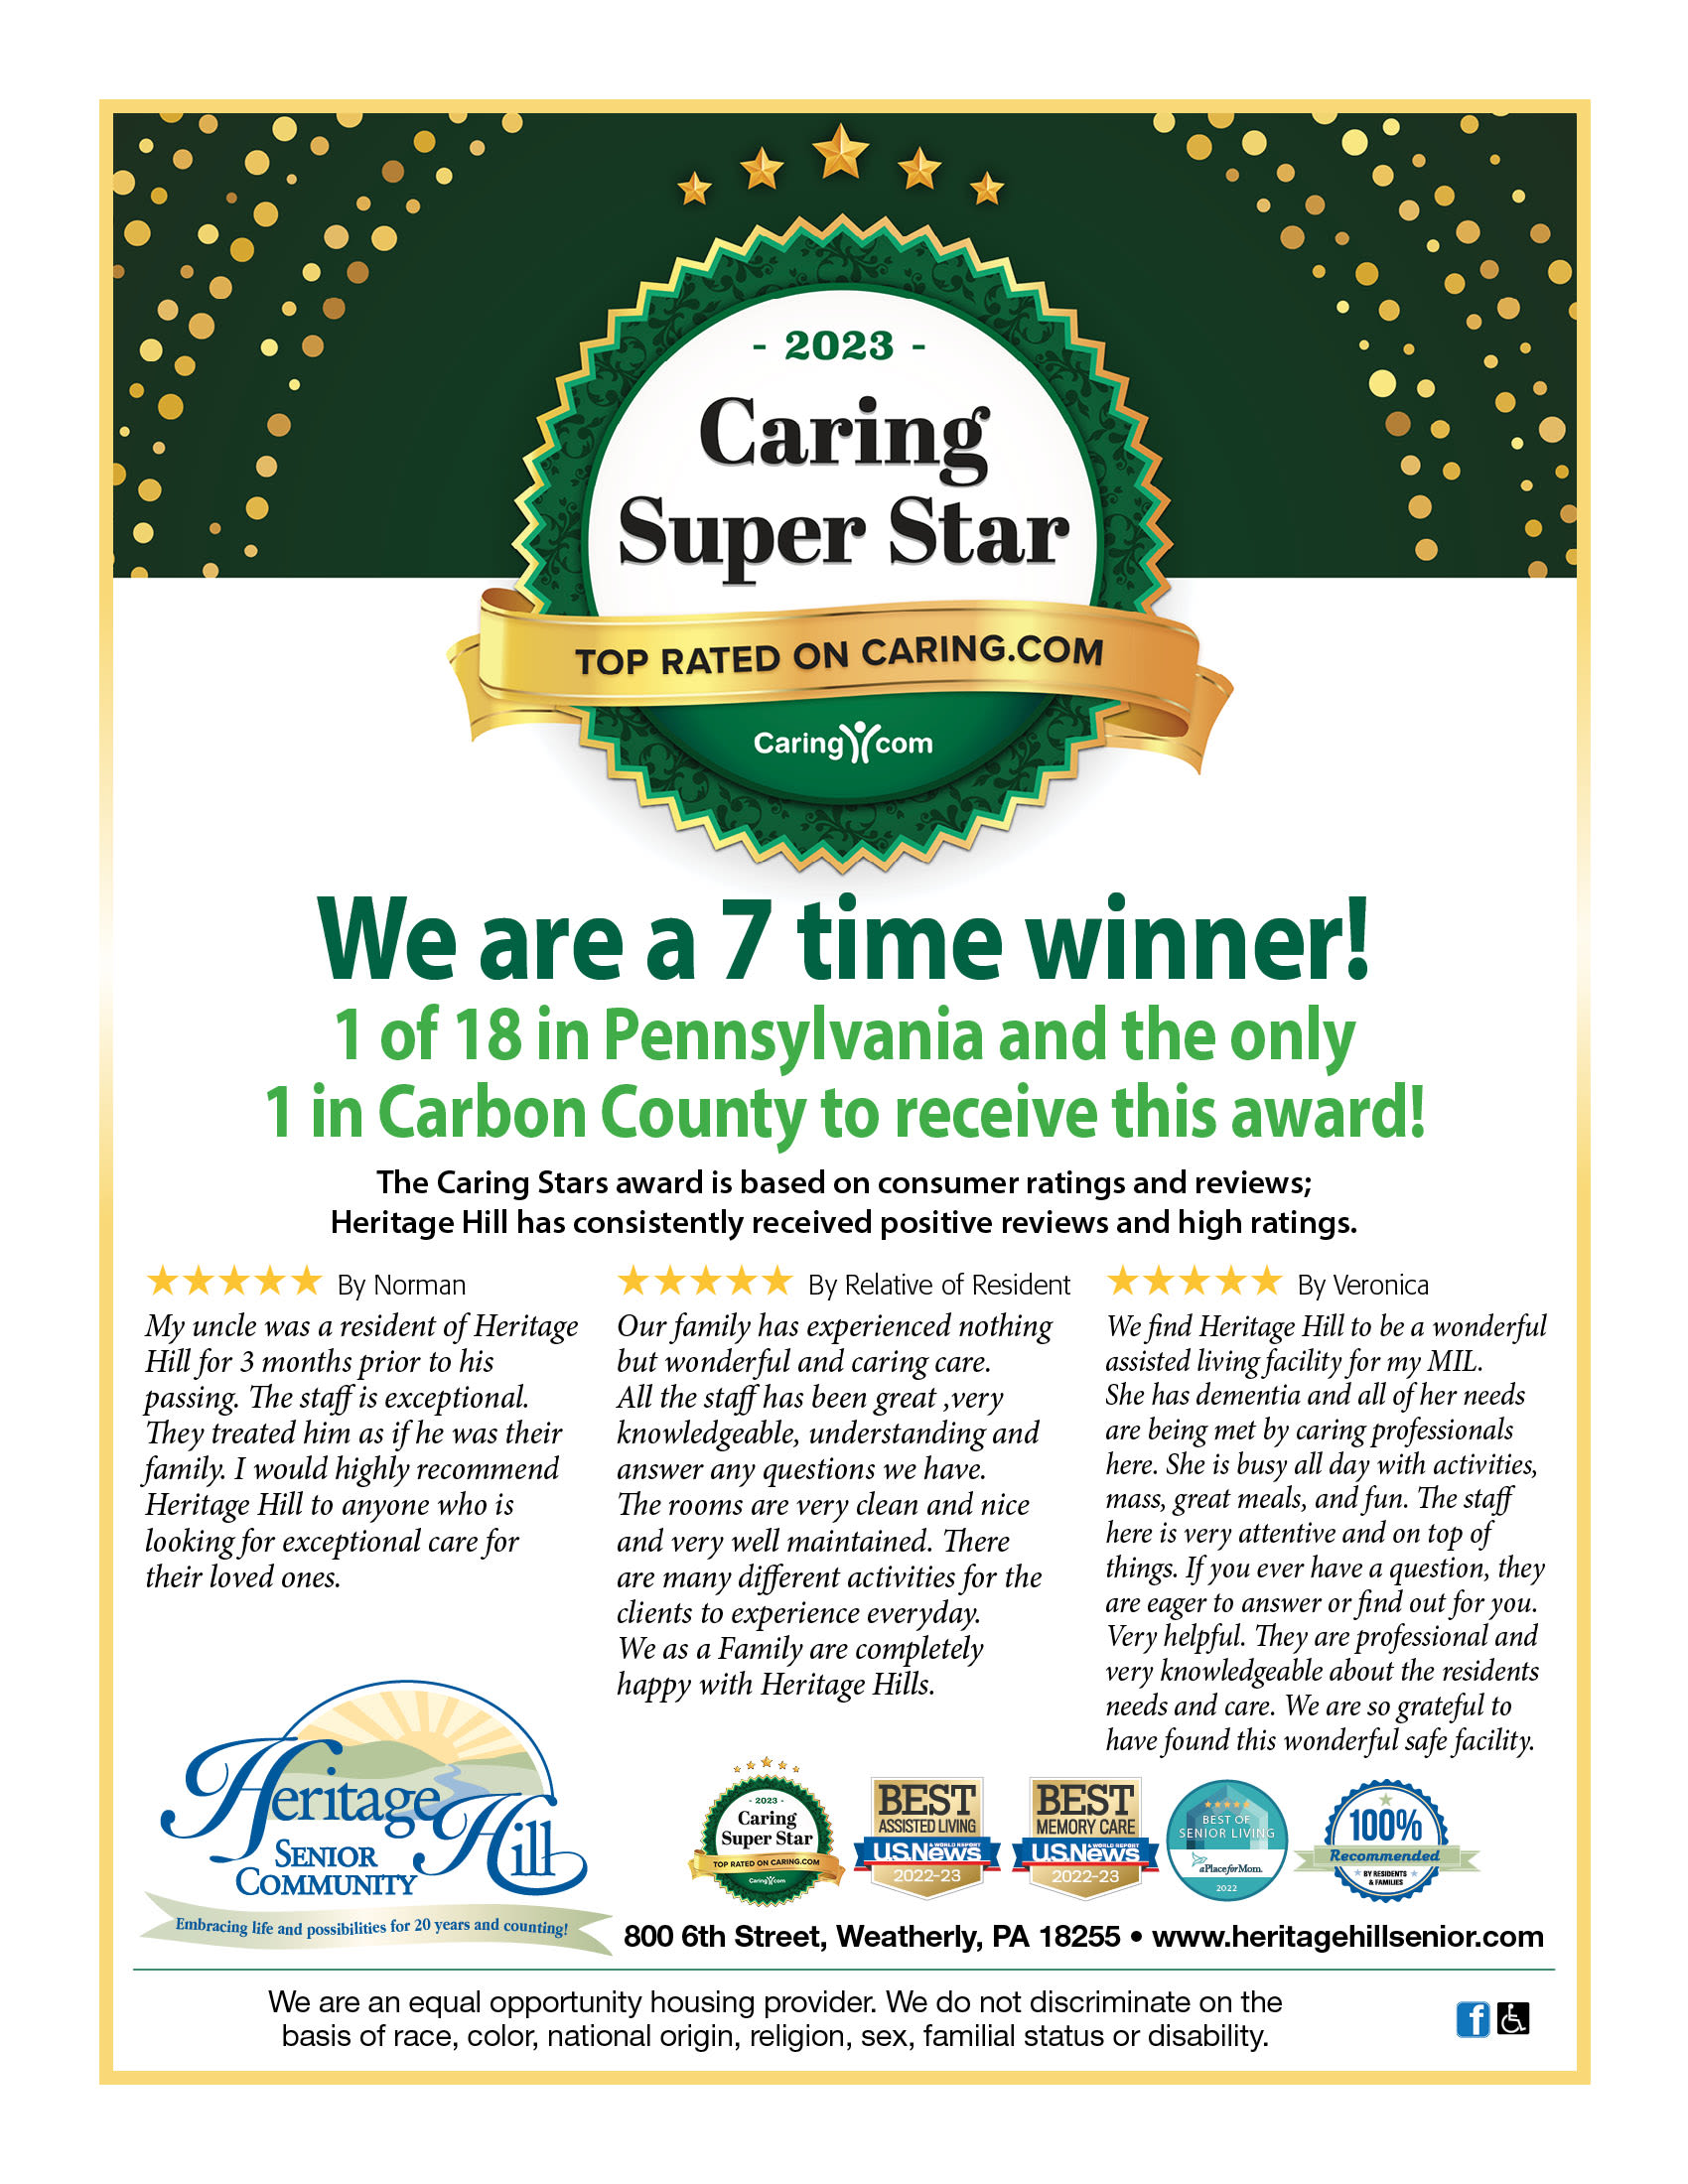 Caring super star award at Heritage Hill Senior Community